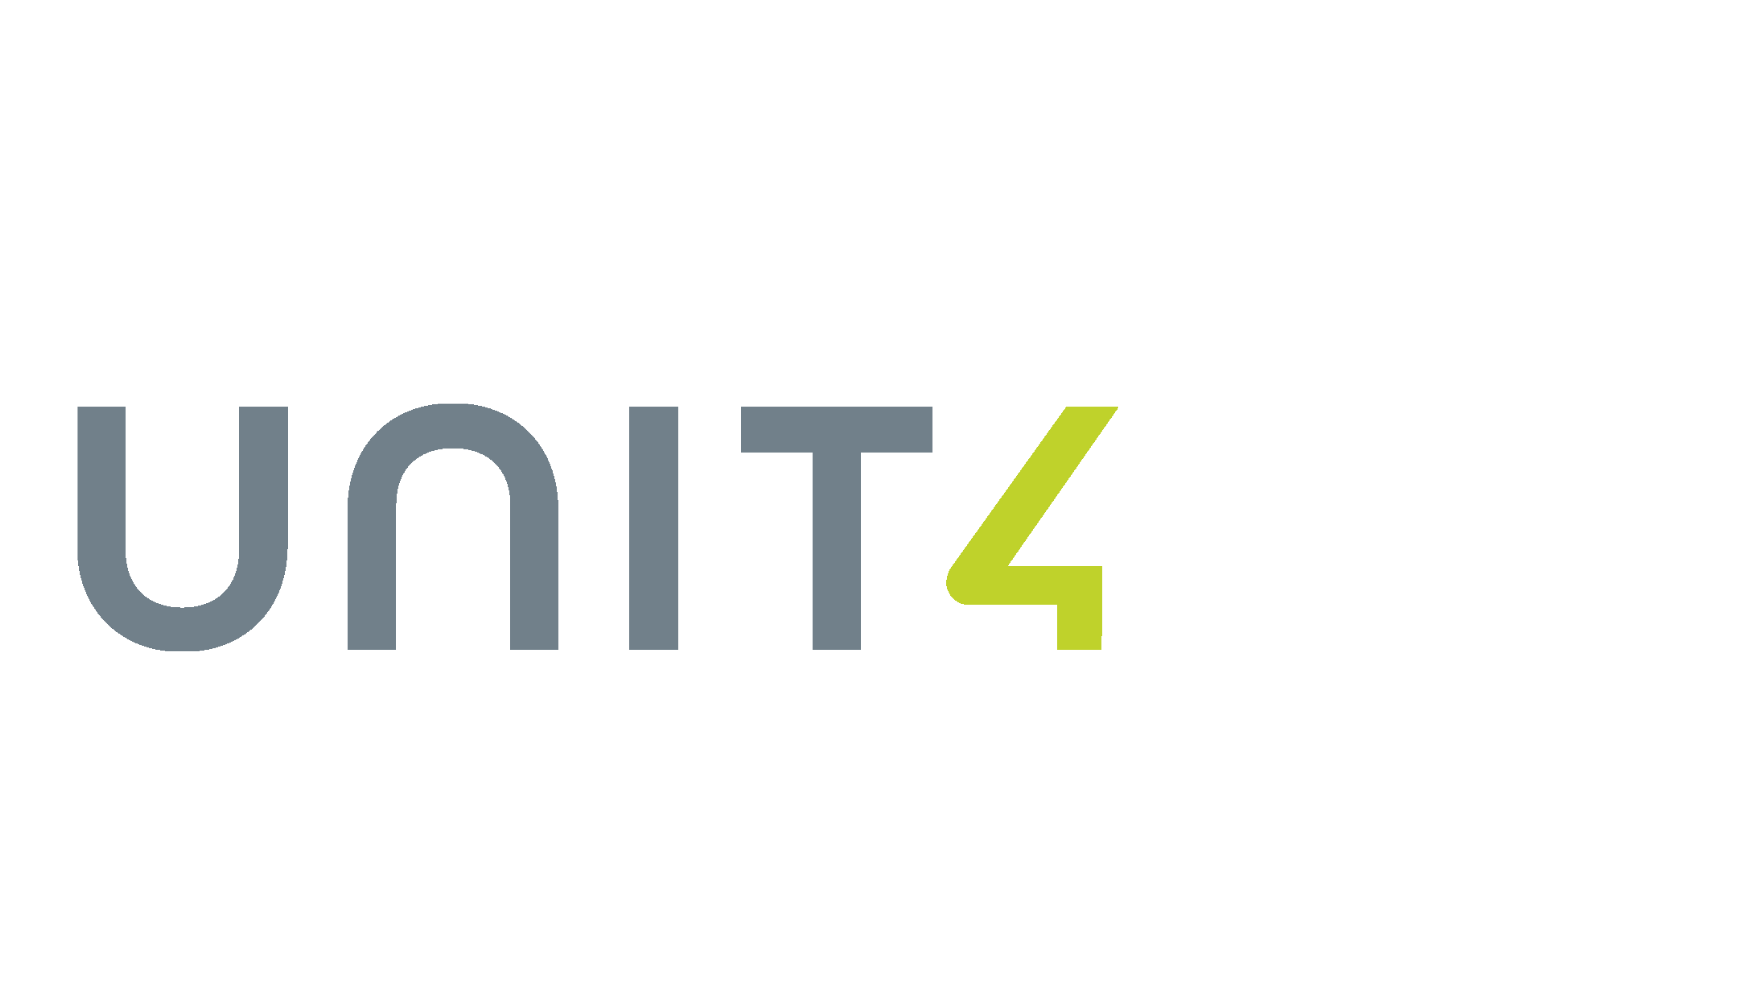 Unit4 Logo